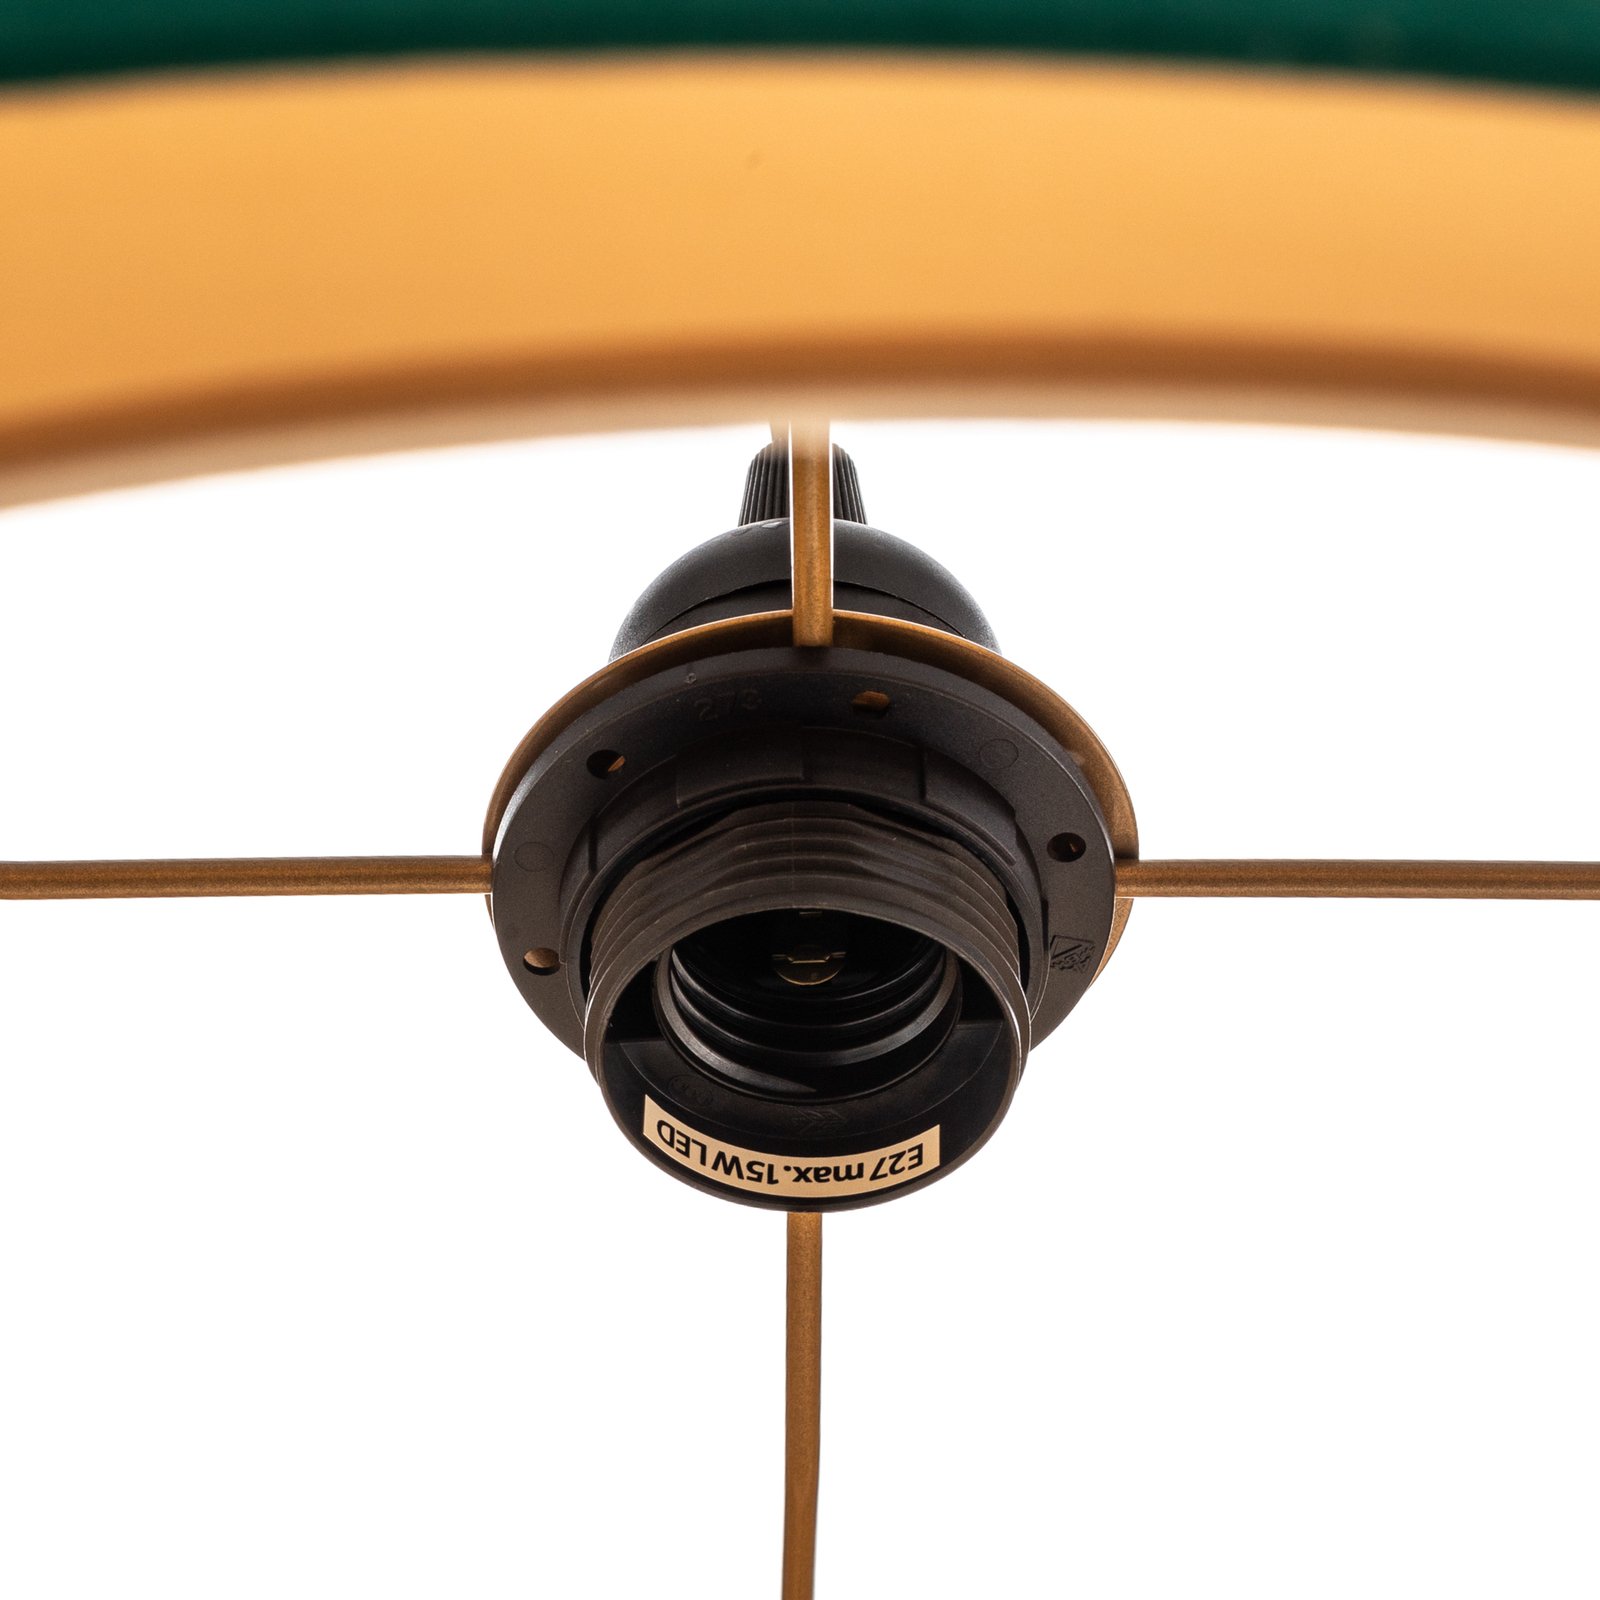 Duo hængelampe, grøn/guld, Ø 60 cm, 1 lyskilde